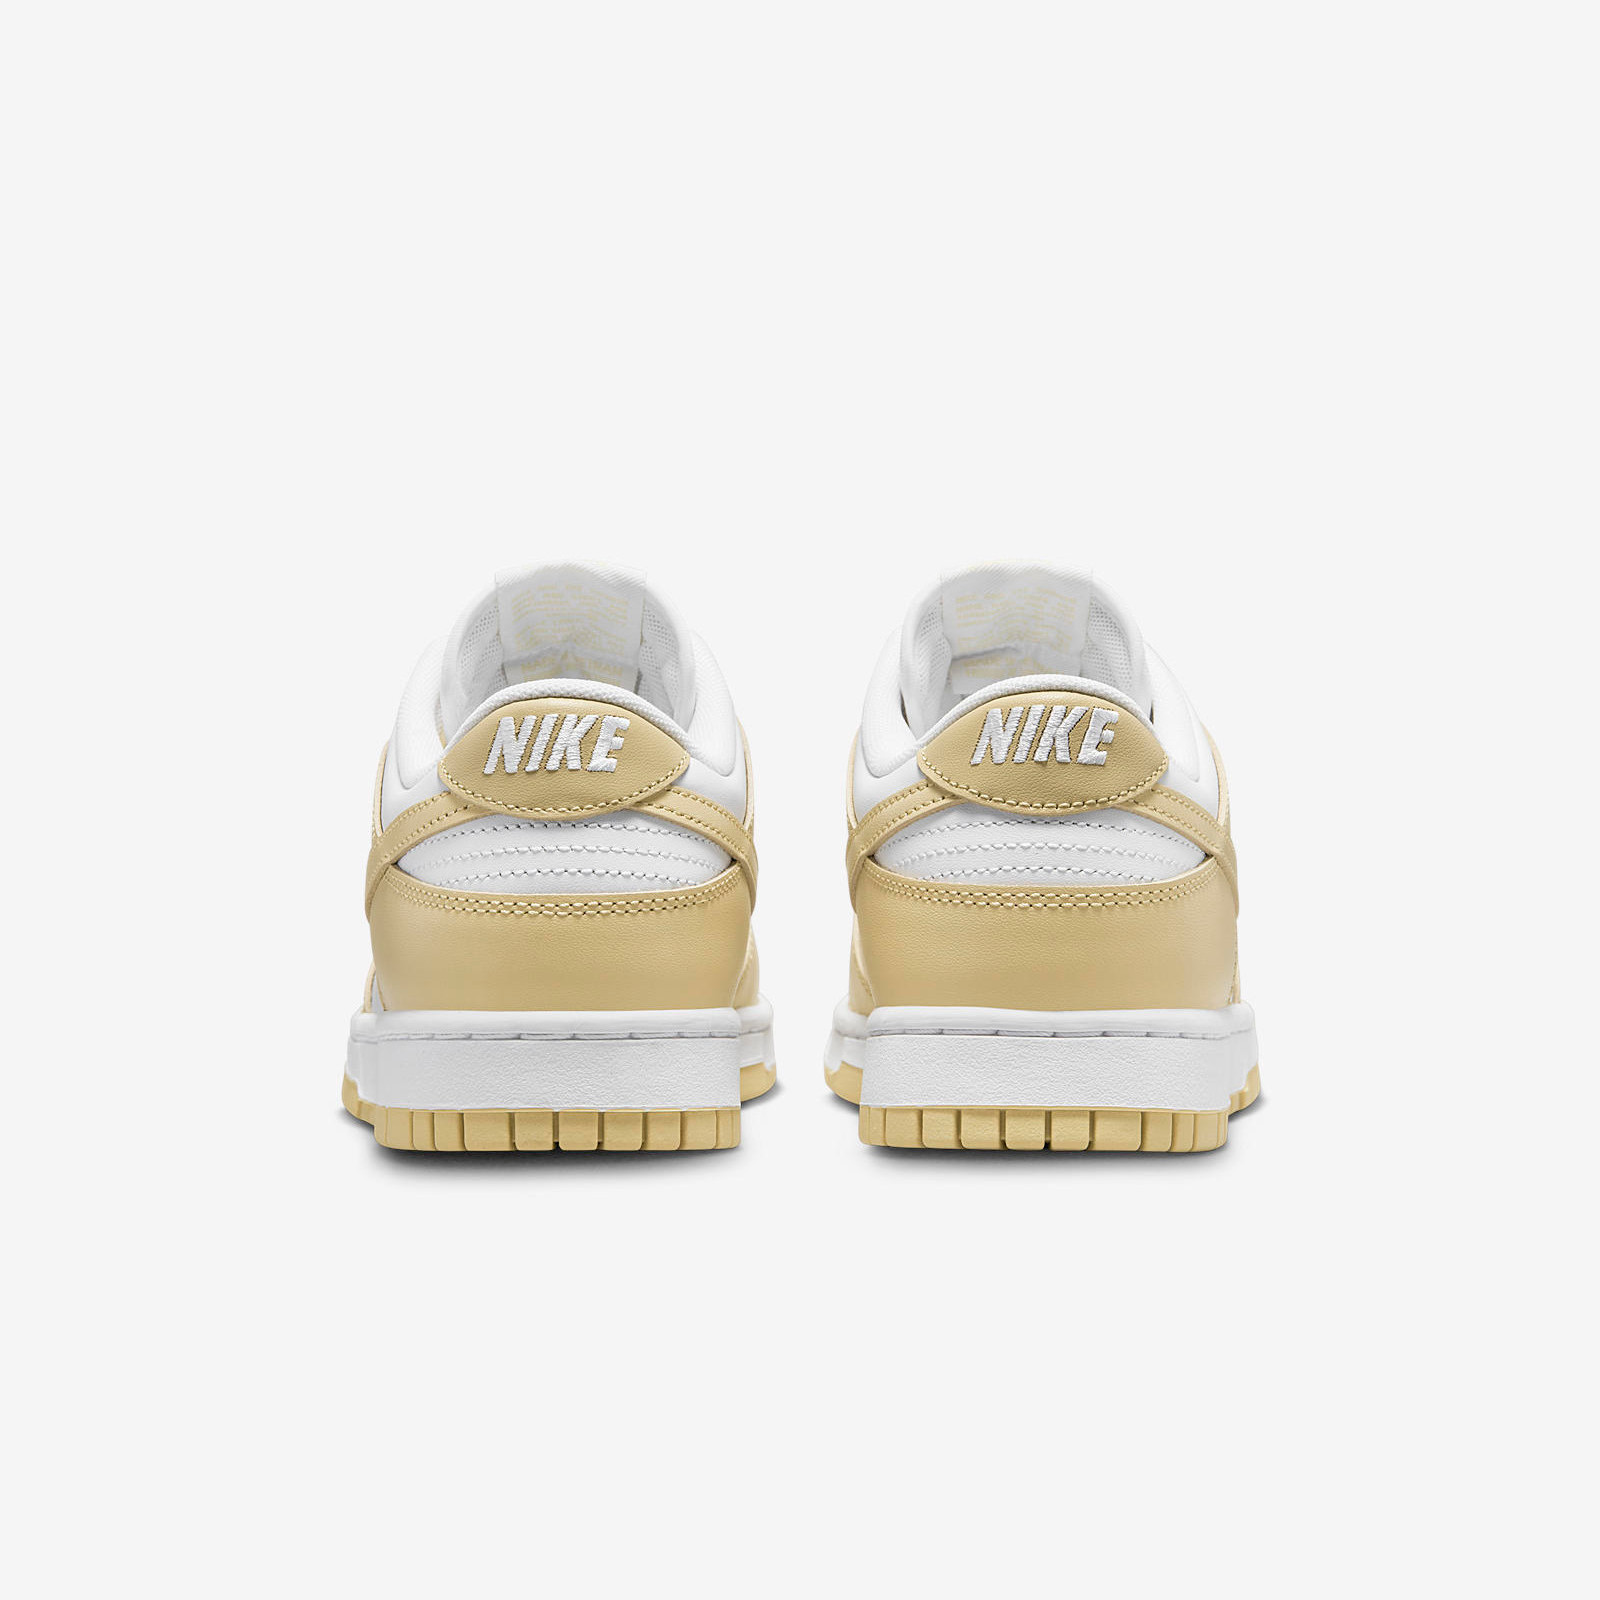 Nike Dunk Low
White / Gold